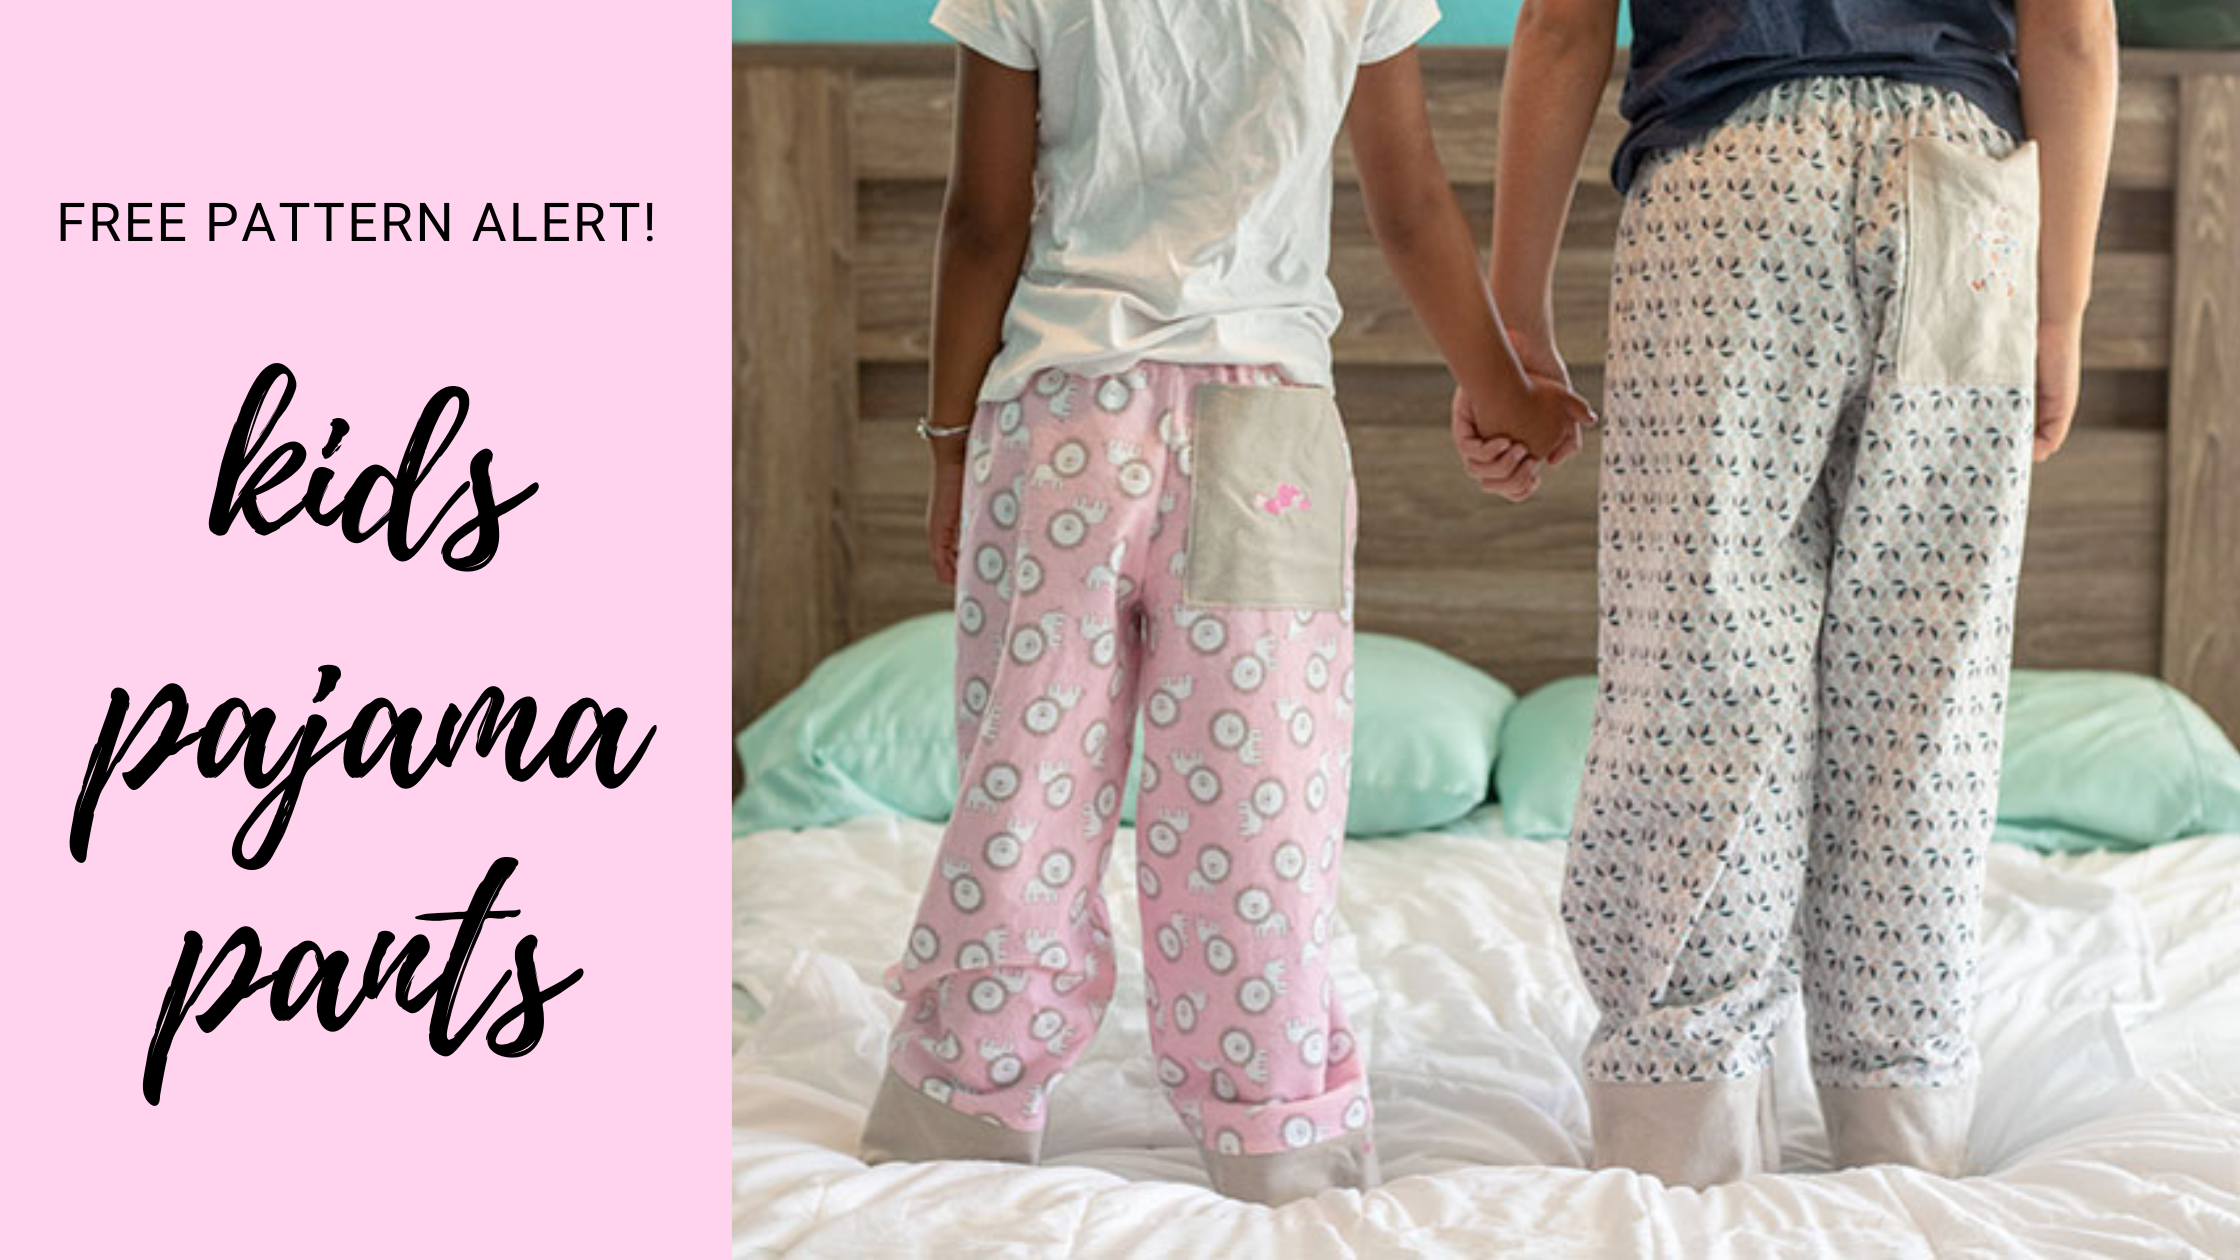 Zoe Floral Printed Pure Cotton Pajama Pants with Pockets – Ayurvastram